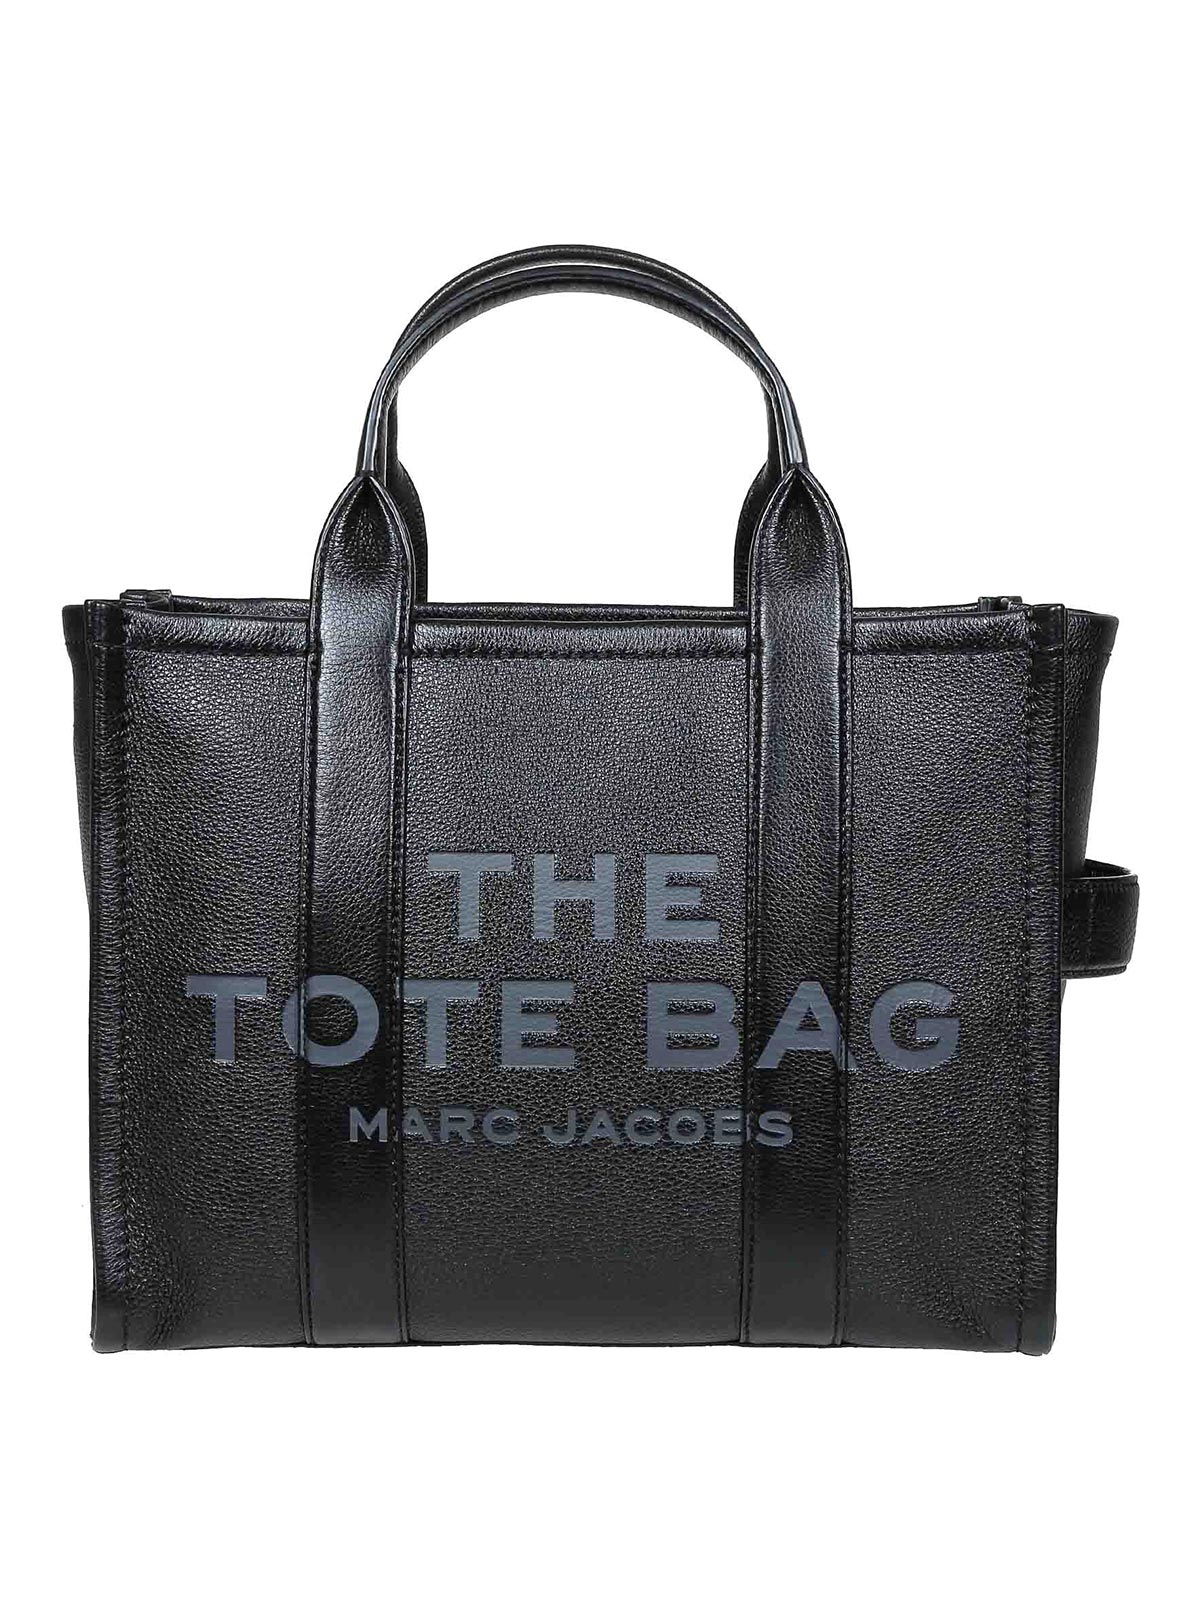 Marc Jacobs The Leather Medium Tote Black Handbag